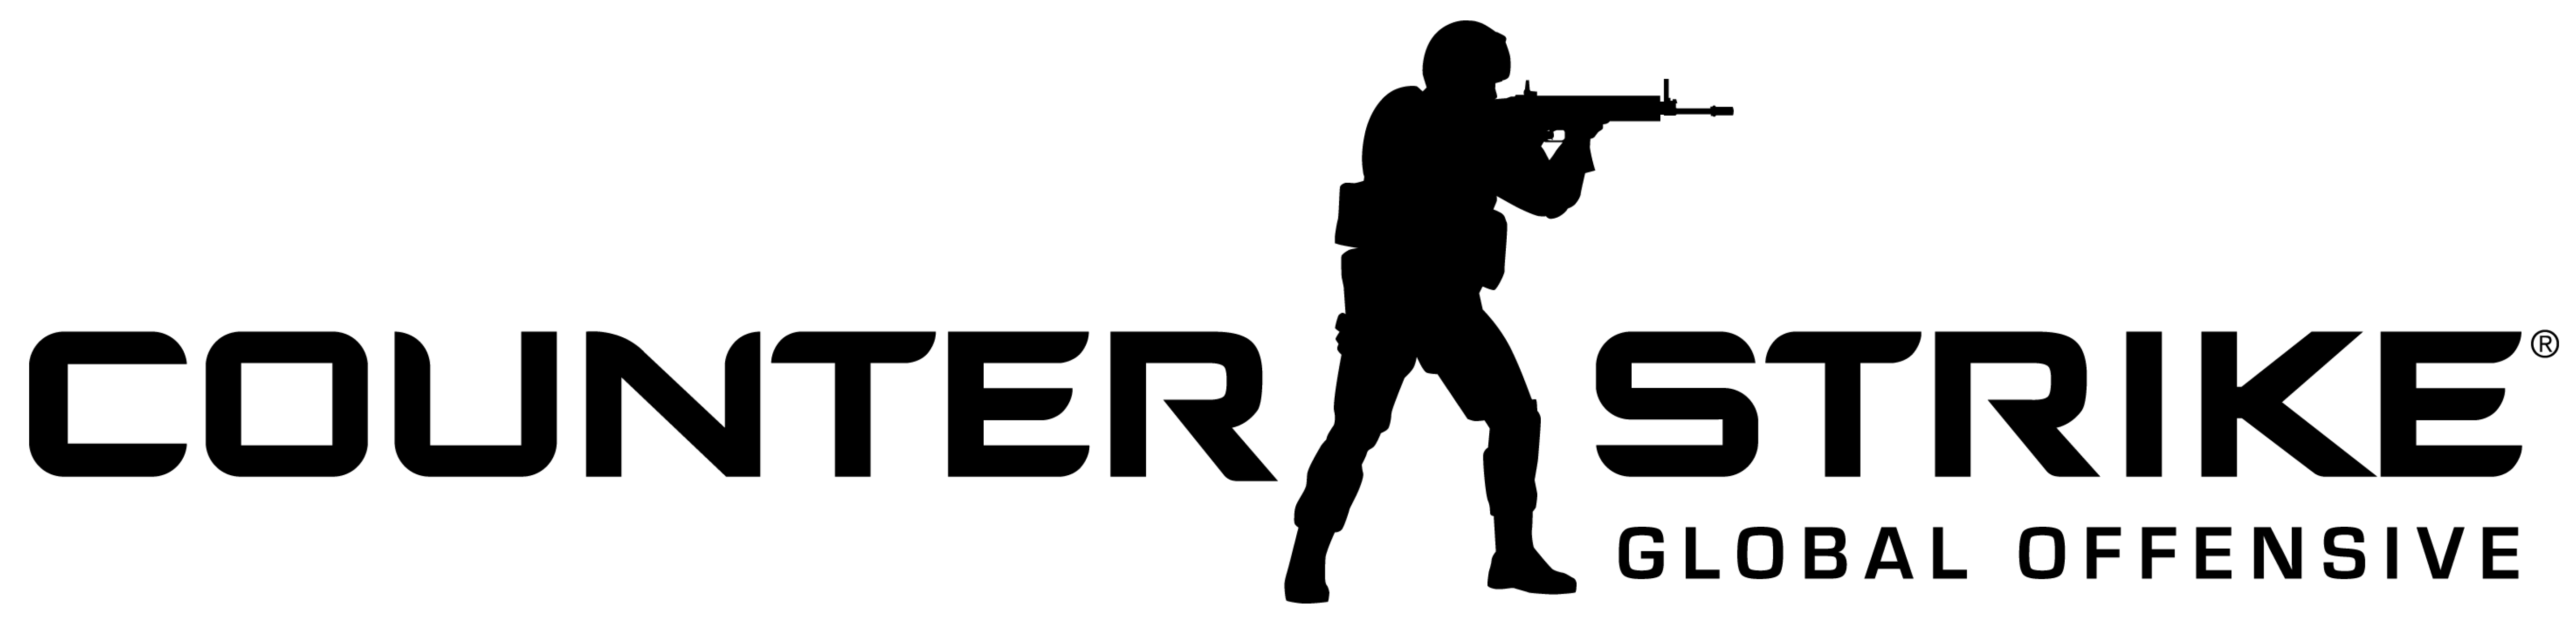 Logo манчестер юнайтед для counter strike - Прогнозы на TRENDOLOGY.RU